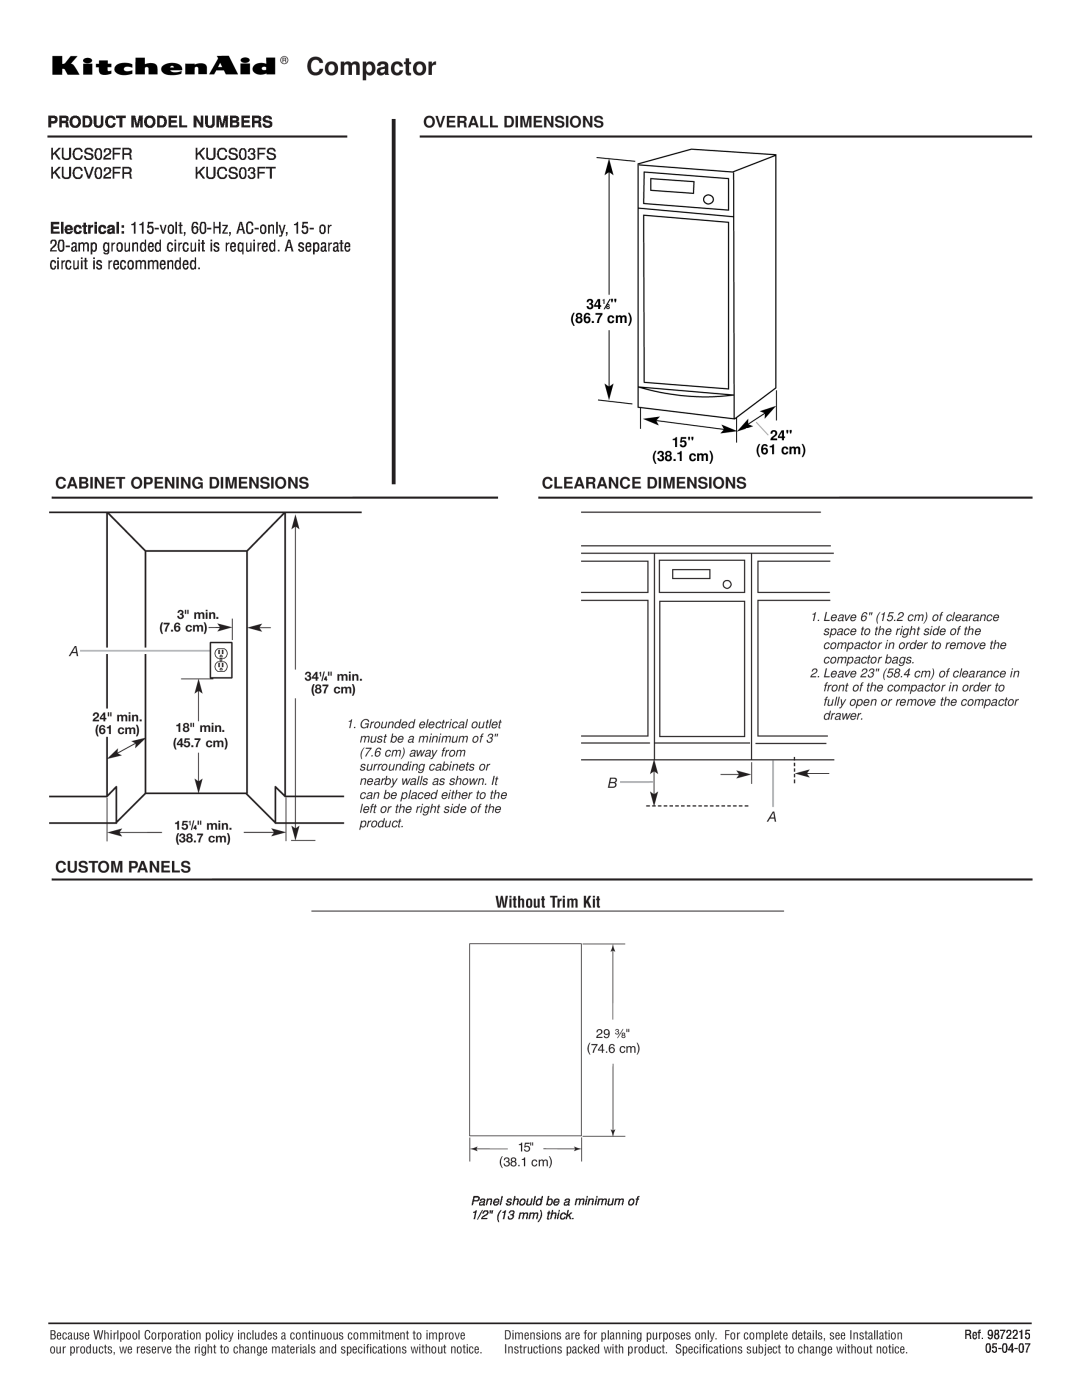 KitchenAid dimensions Compactor, Product Model Numbers, KUCS02FR KUCS03FS KUCV02FR KUCS03FT, Cabinet Opening Dimensions 